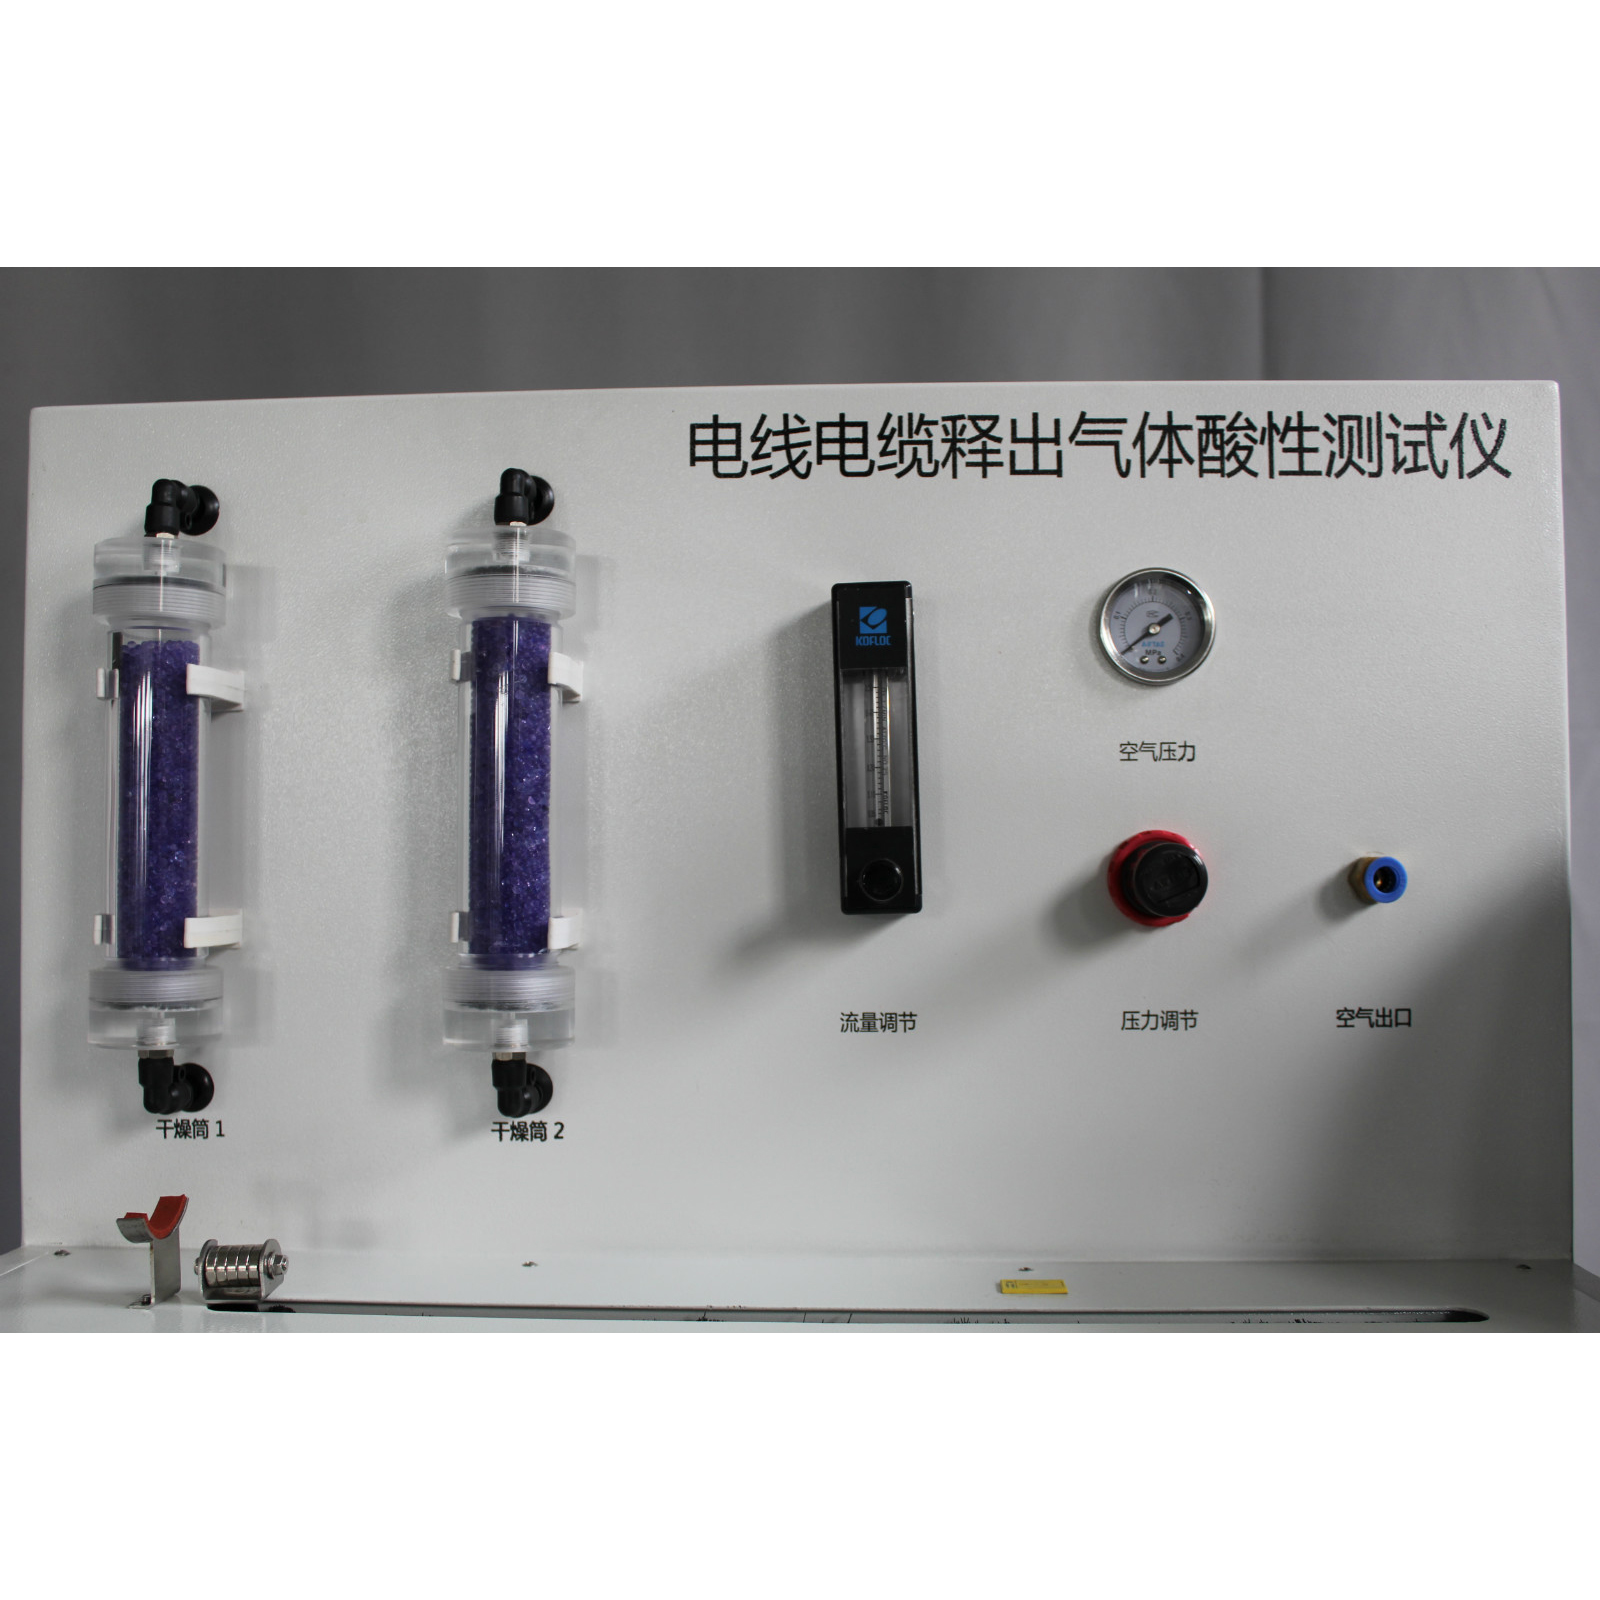 Elektrokabel Halogen-Säuregas-Freisetzungstestgerät, Kabelkorrosionstester IEC 60754-1, 2